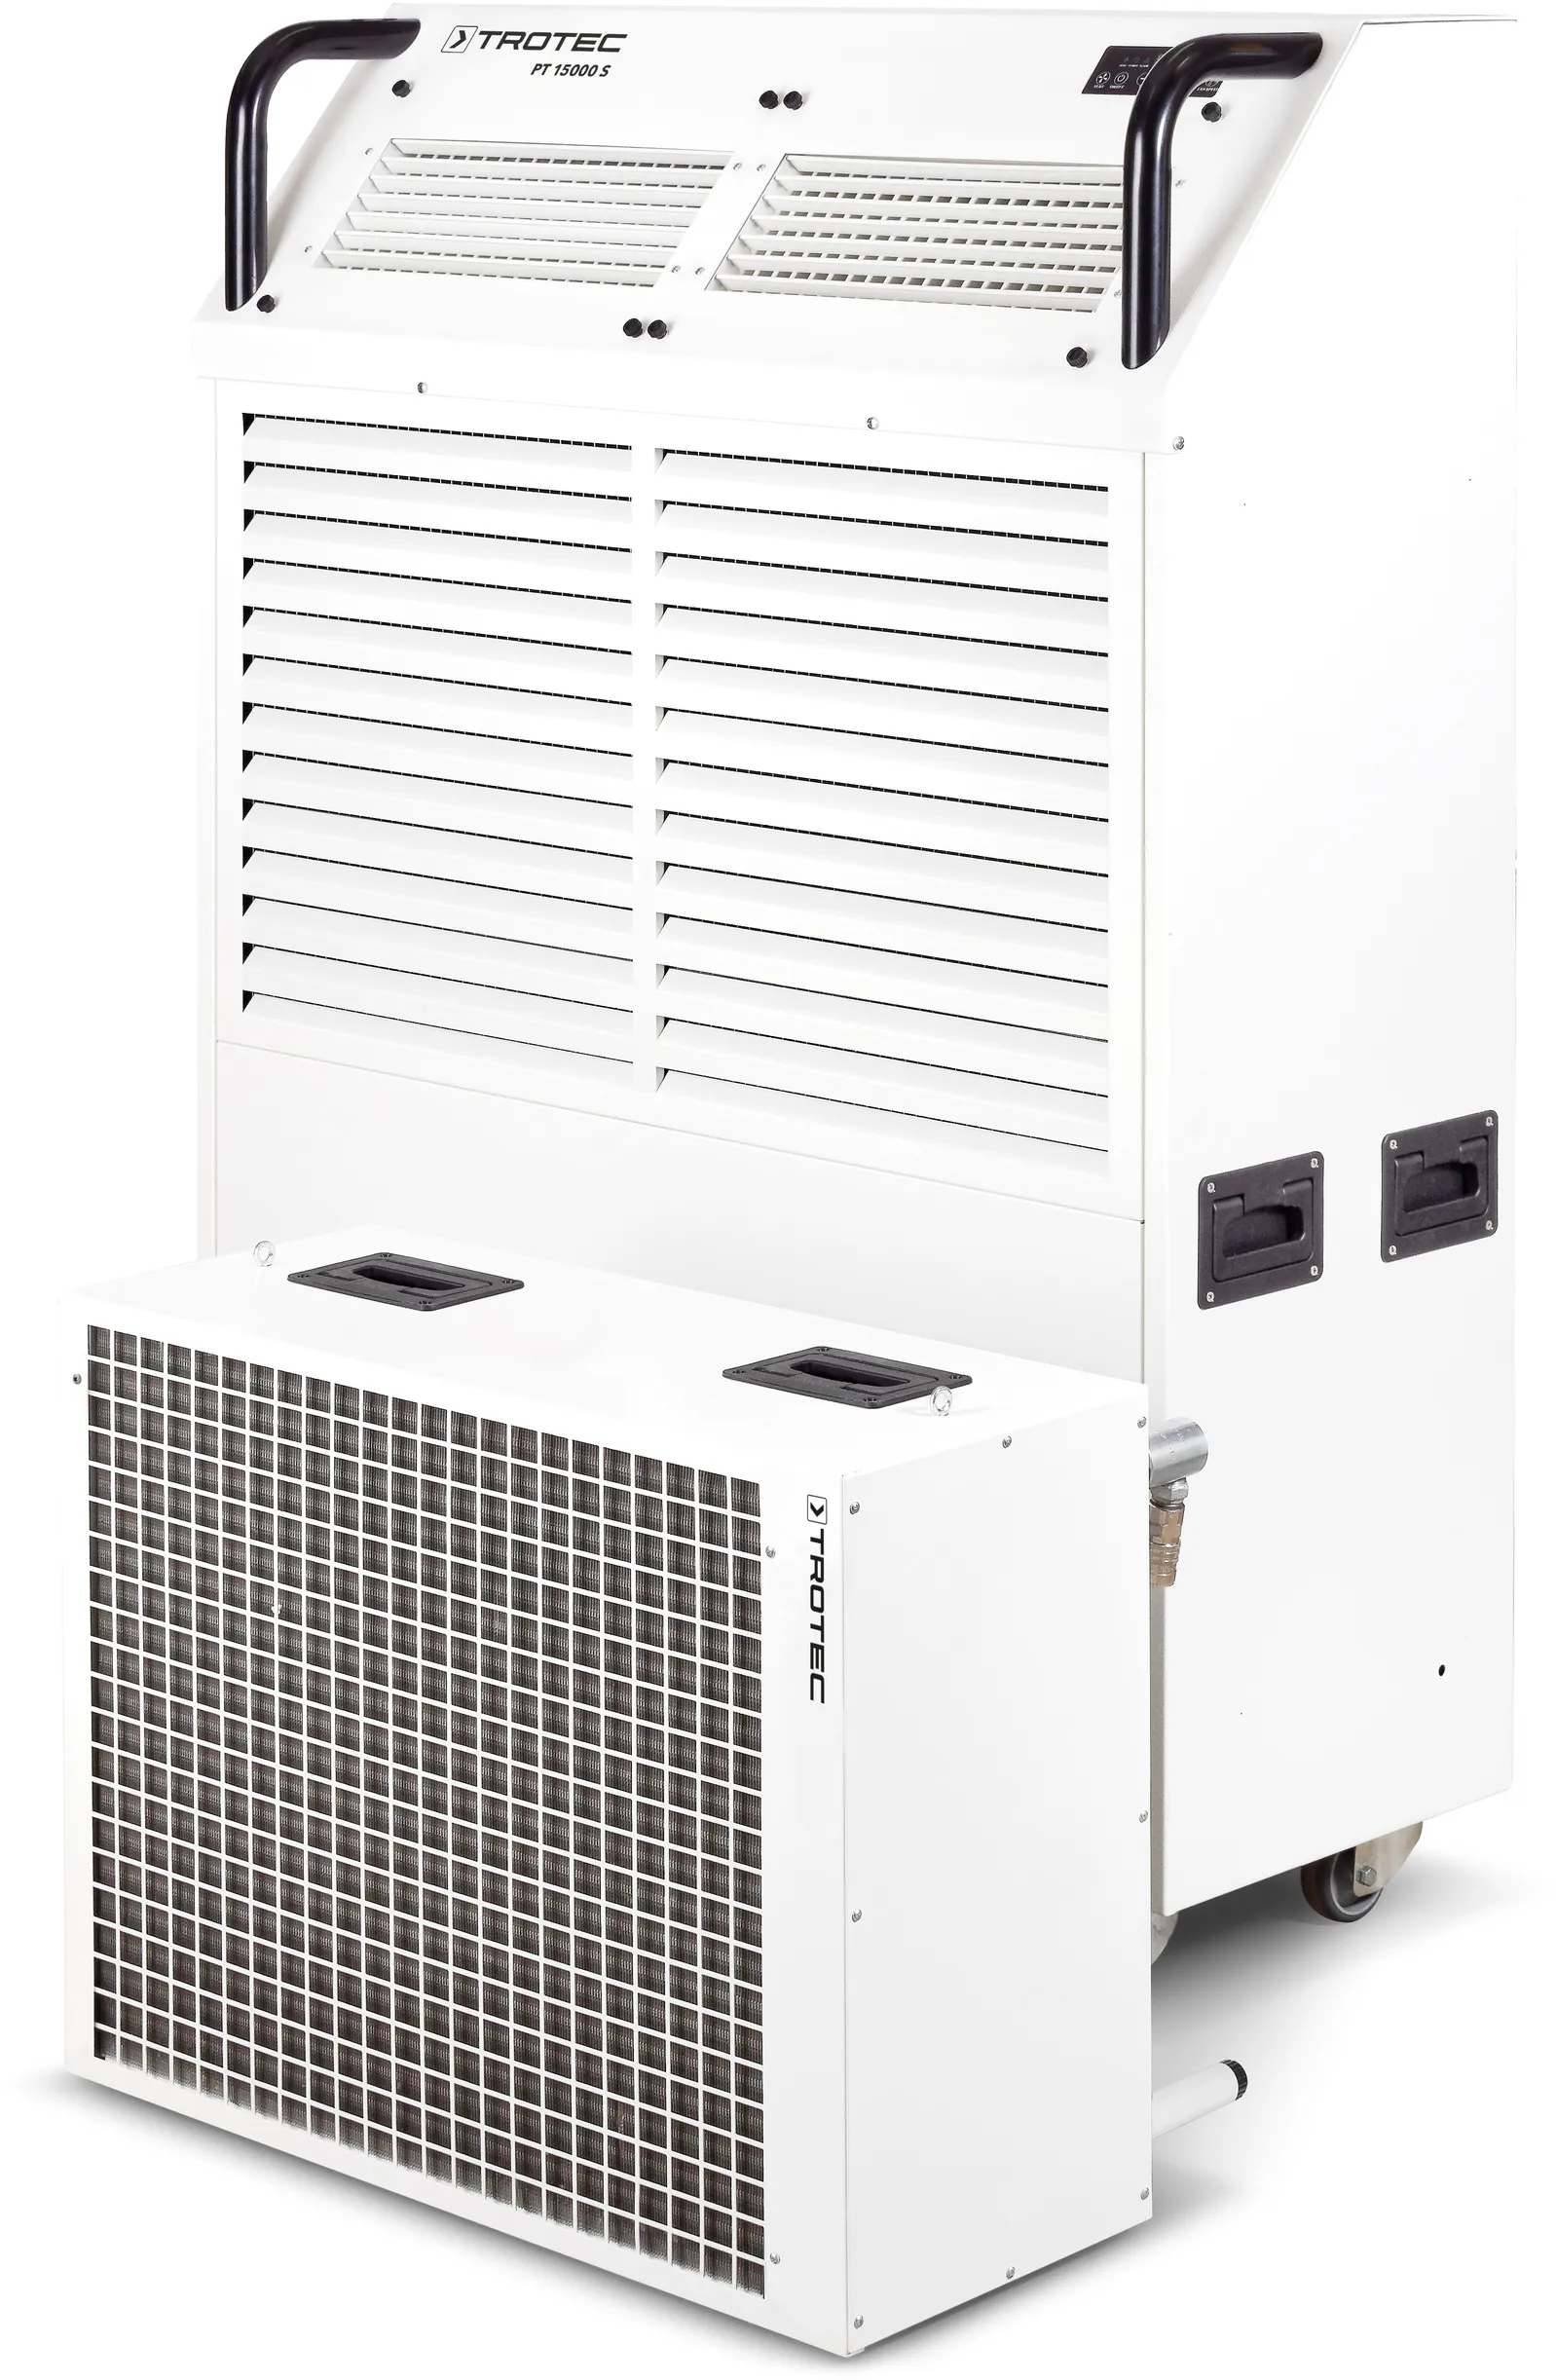 Trotec Mobiele professionele airconditioner PT 15000 S